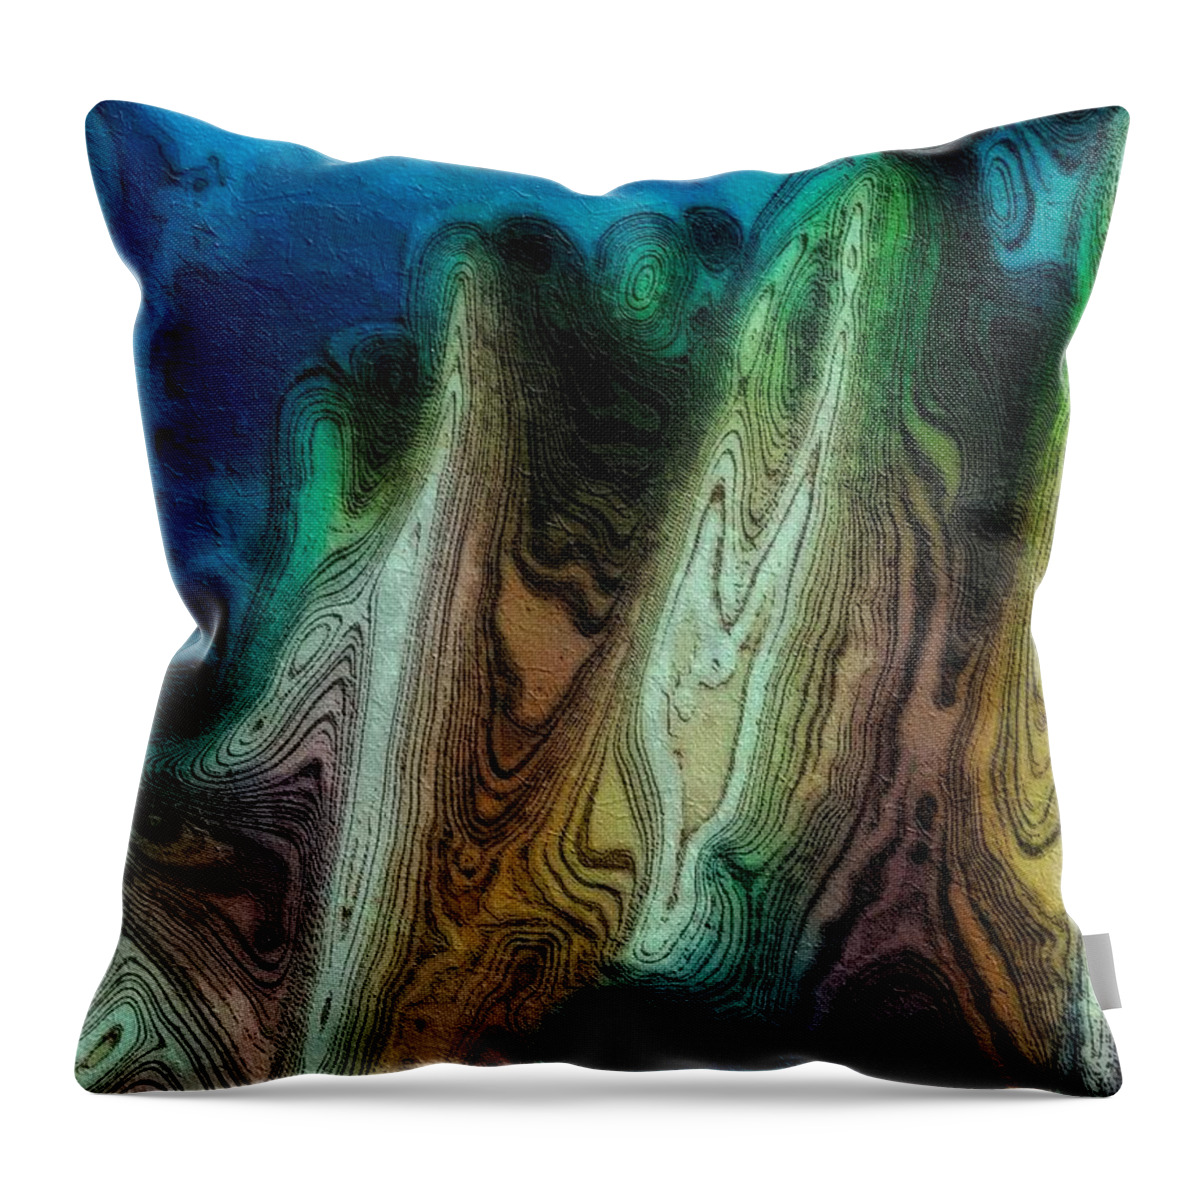 Cactus Throw Pillow featuring the digital art Cactus Abstract Study 1 by Diana Rajala